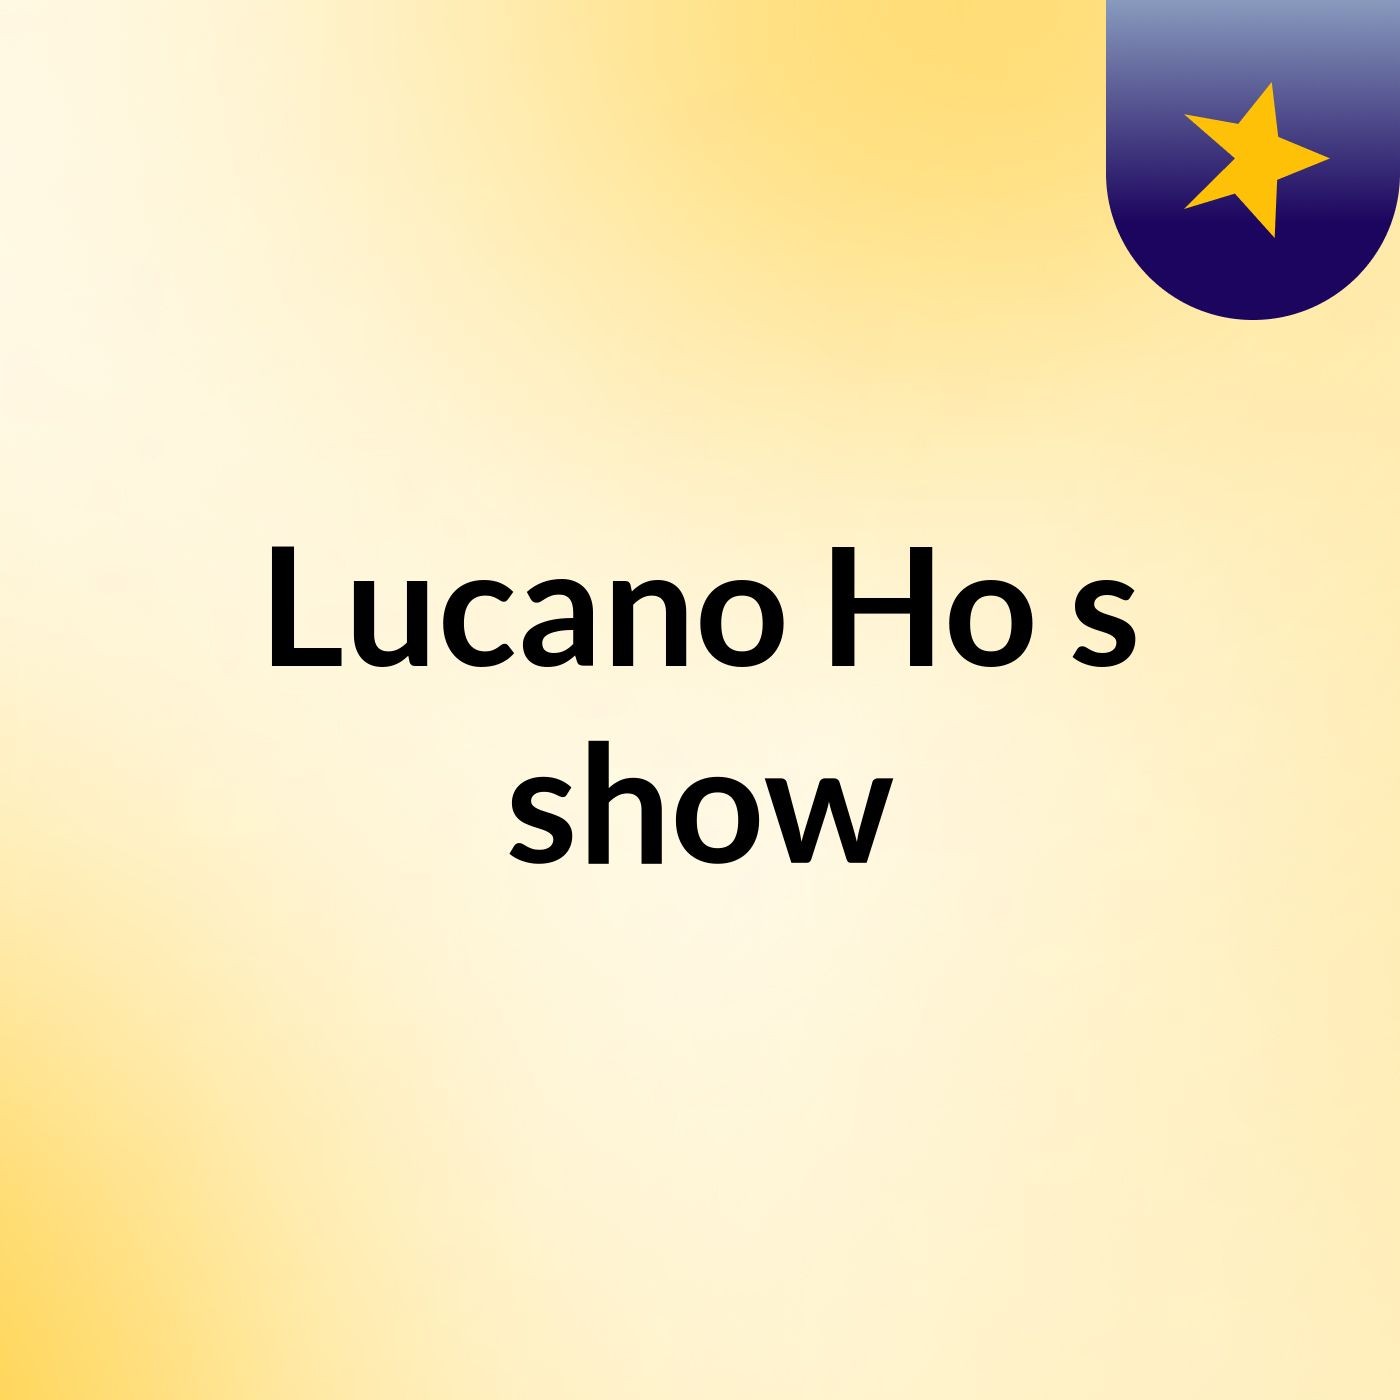 Lucano Ho's show